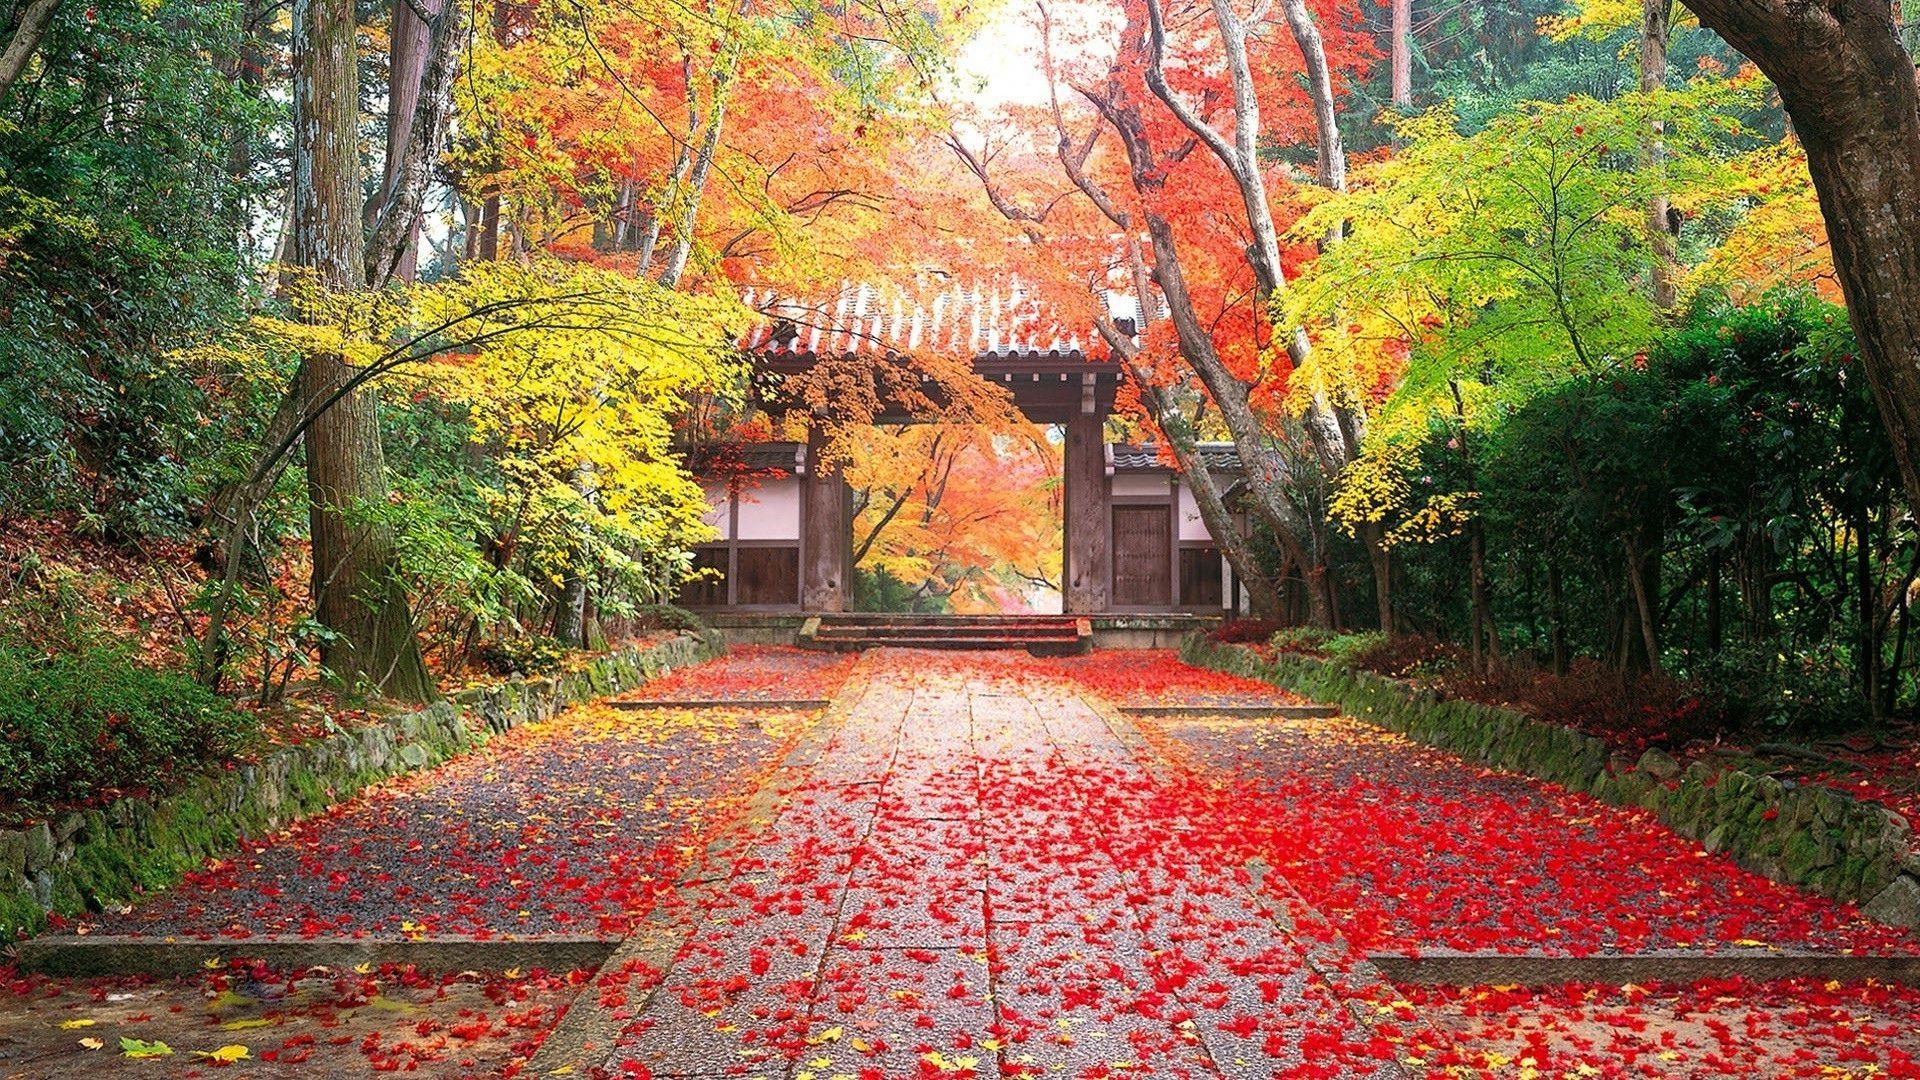 Autumn Japan Wallpapers - Top Free Autumn Japan Backgrounds ...